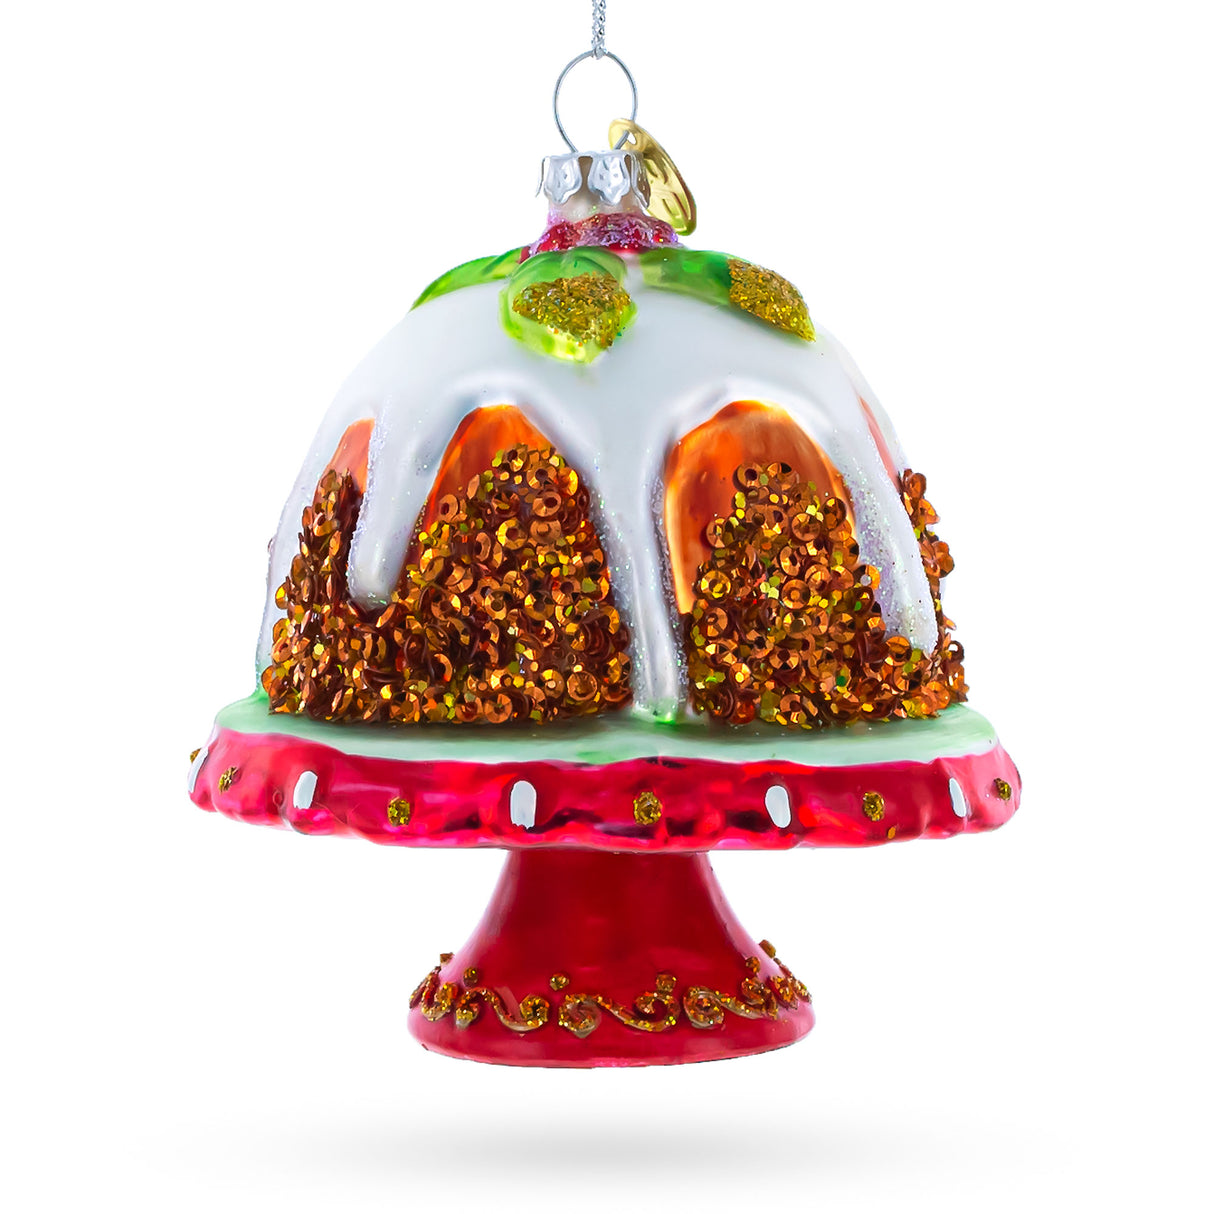 Glazed Cake - Blown Glass Christmas Ornament in Multi color,  shape